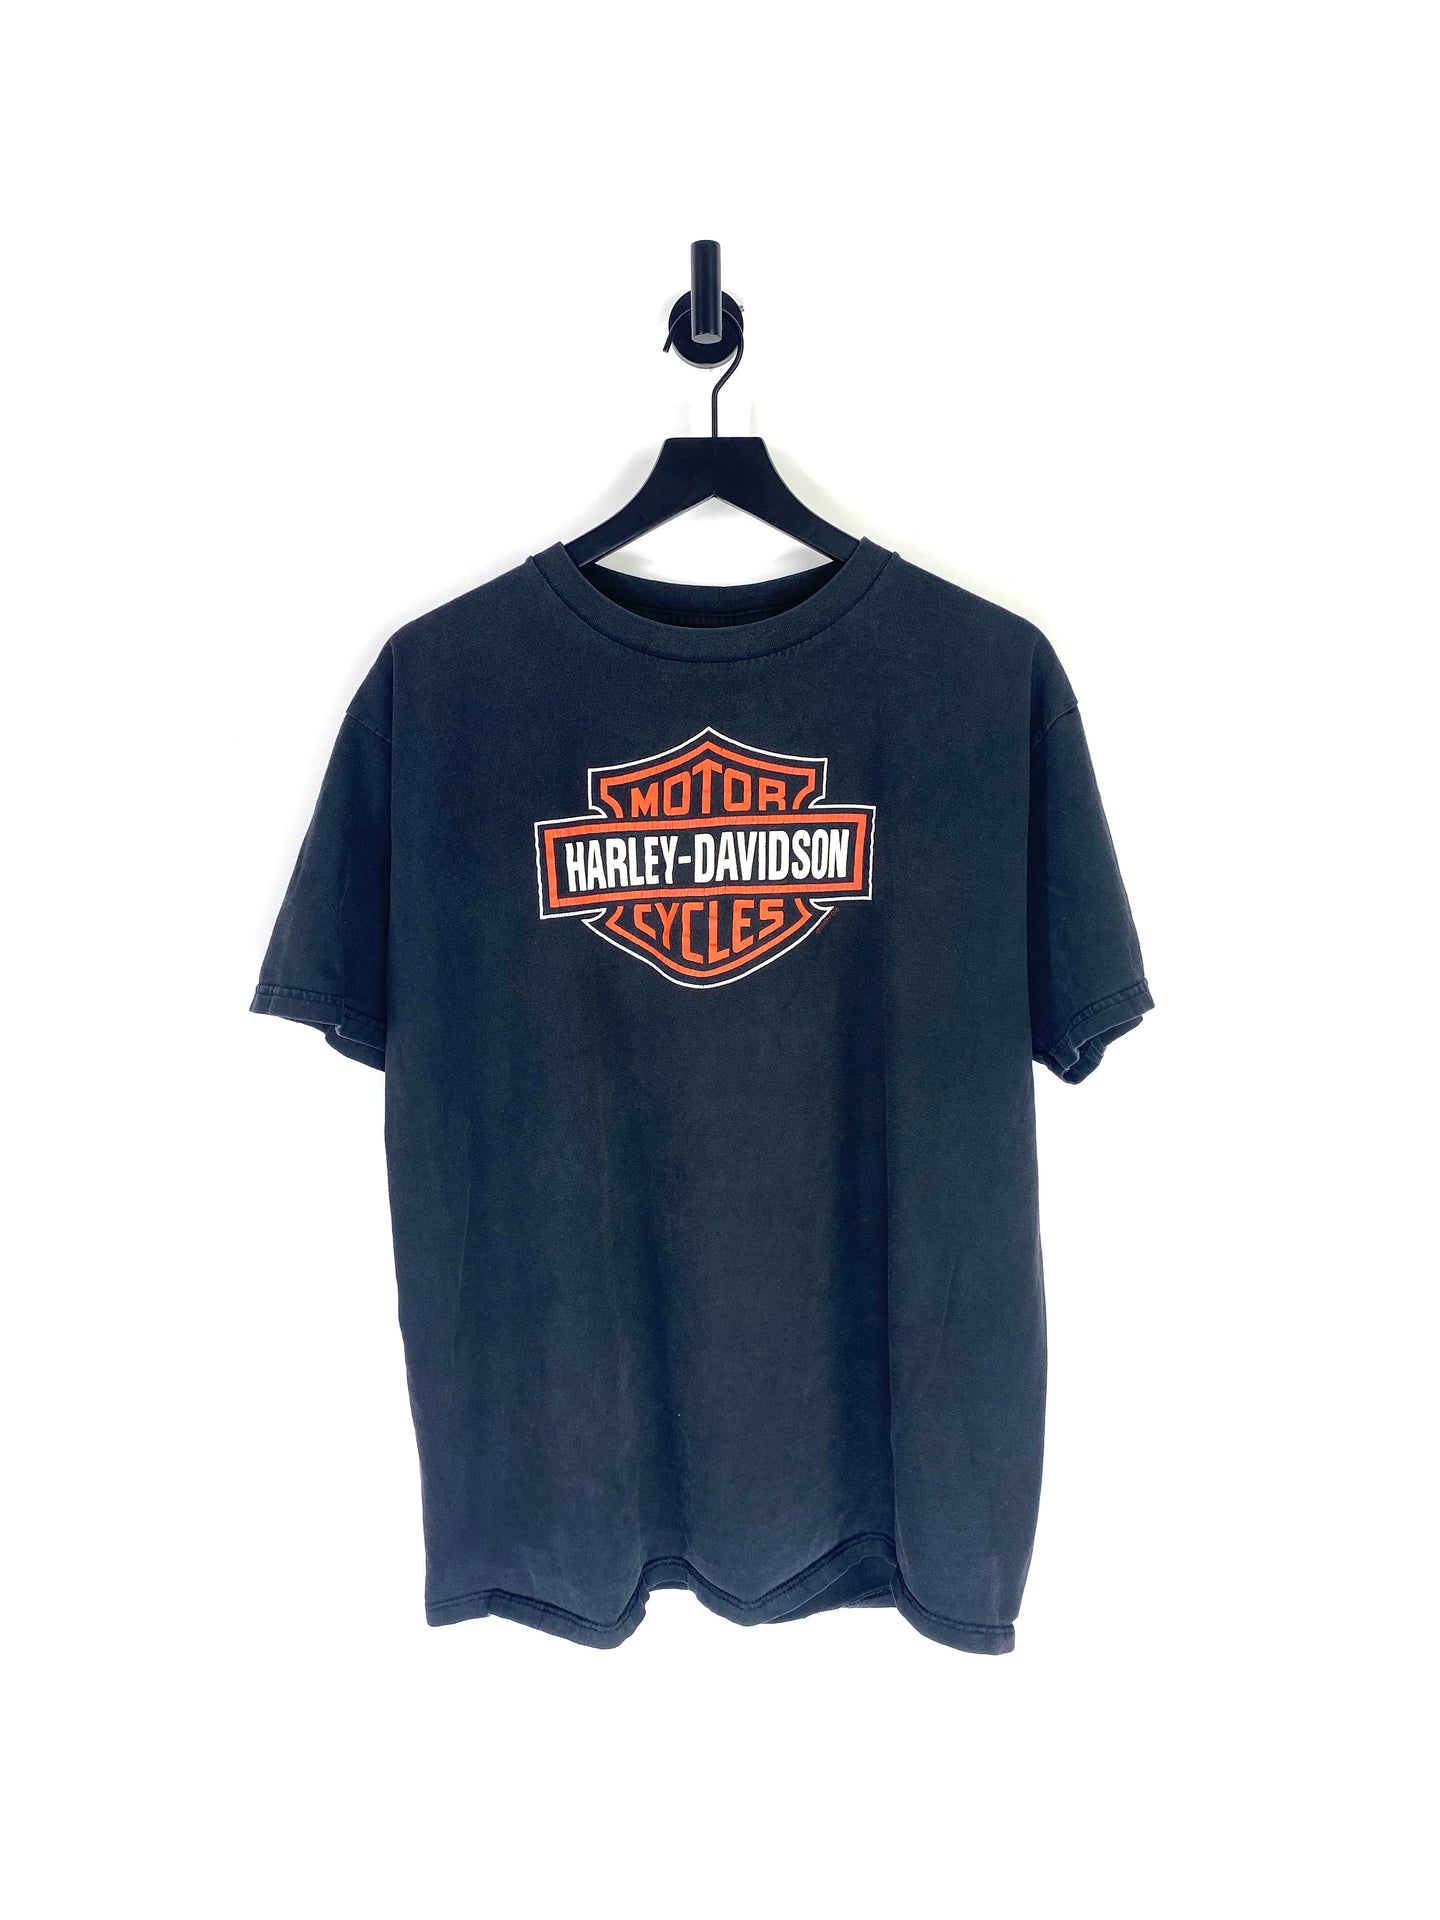 1999 Harley Davidson T Shirt - XL